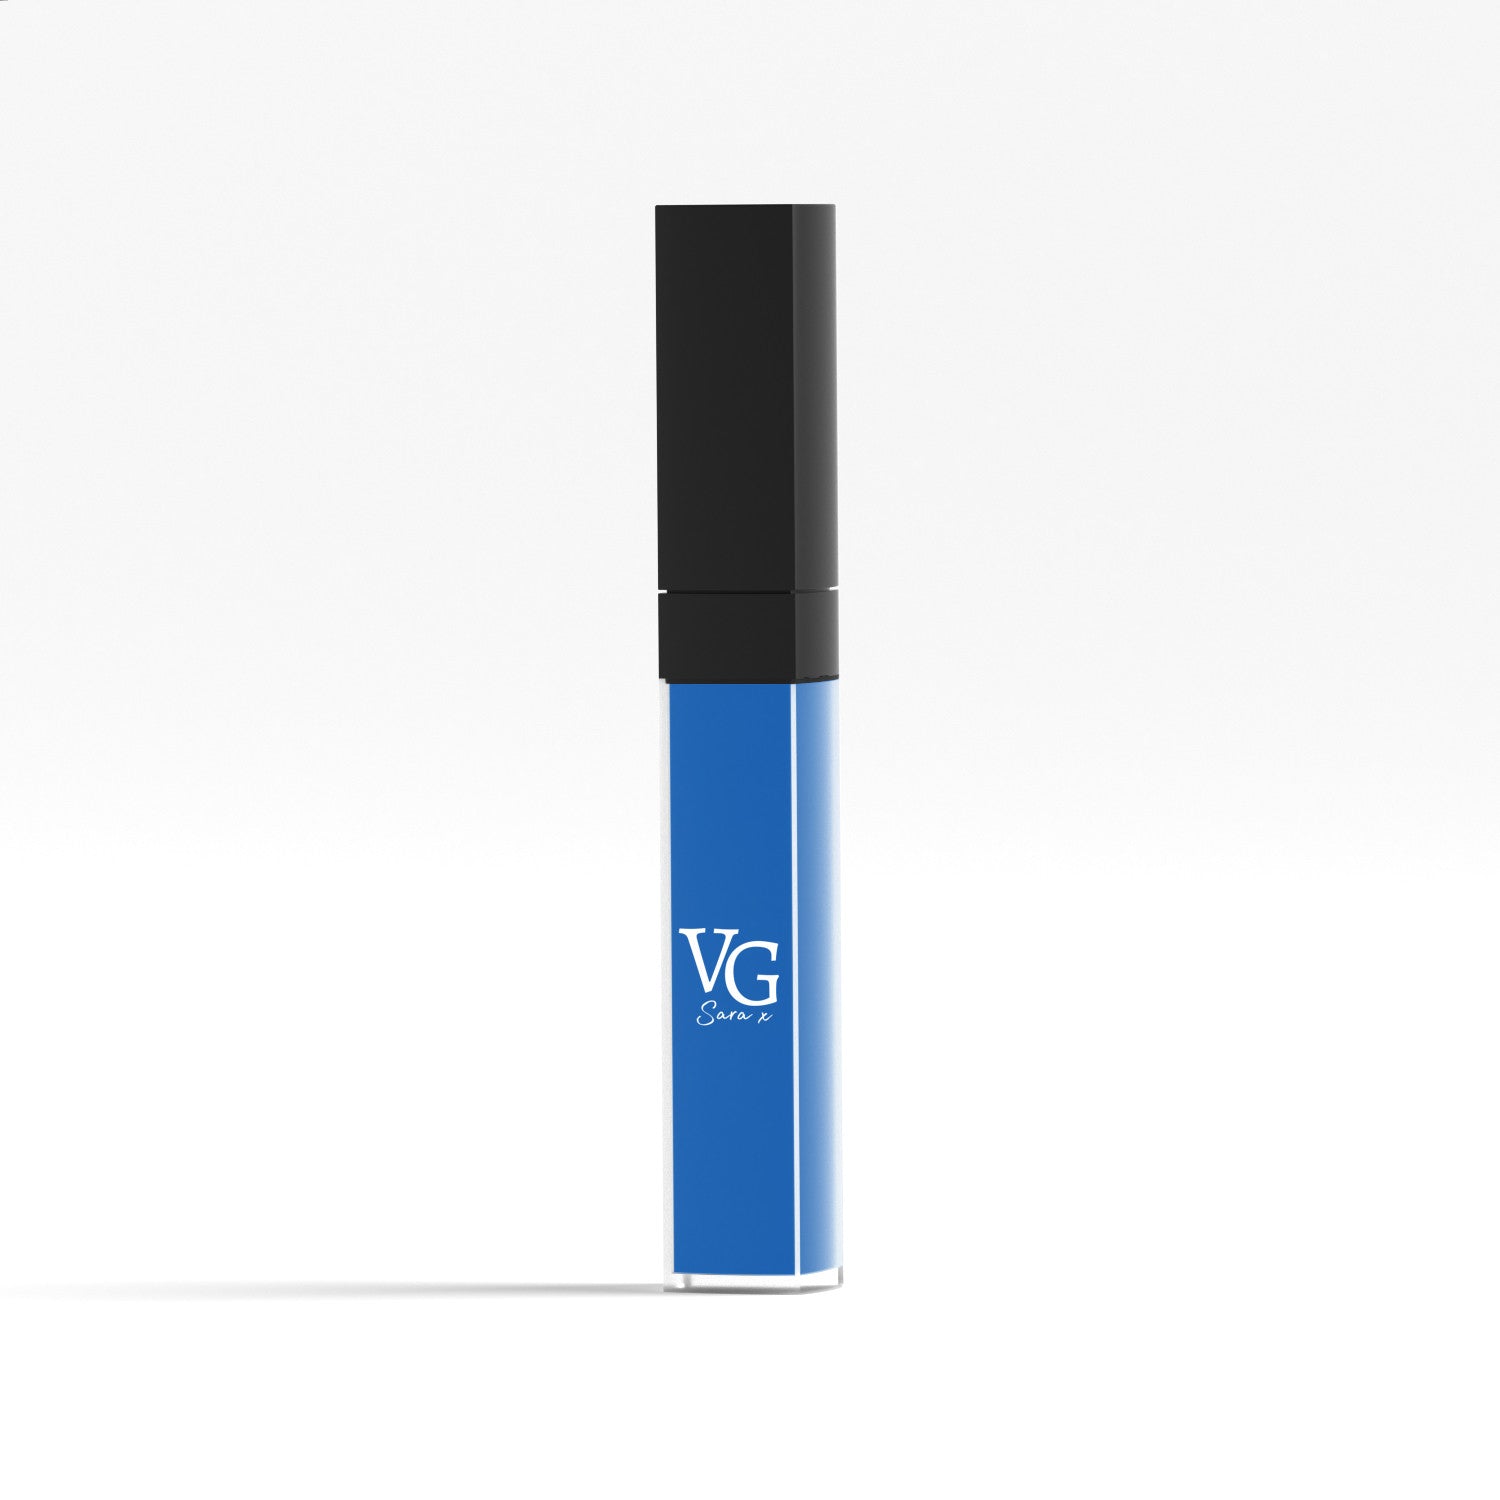 VG vegan liquid lipstick with a vibrant blue color